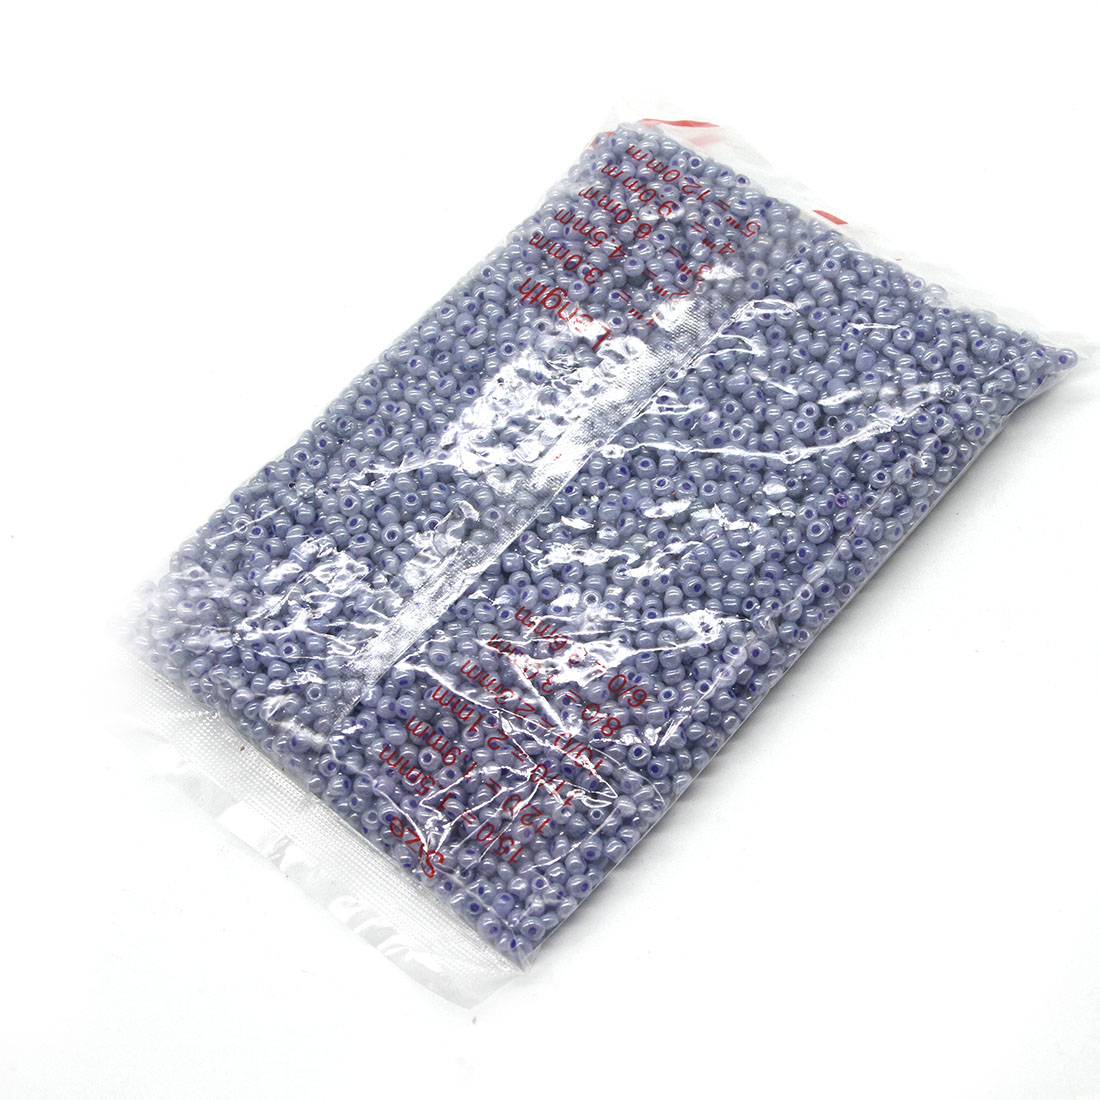 Purple blue 3mm 10,000 packs